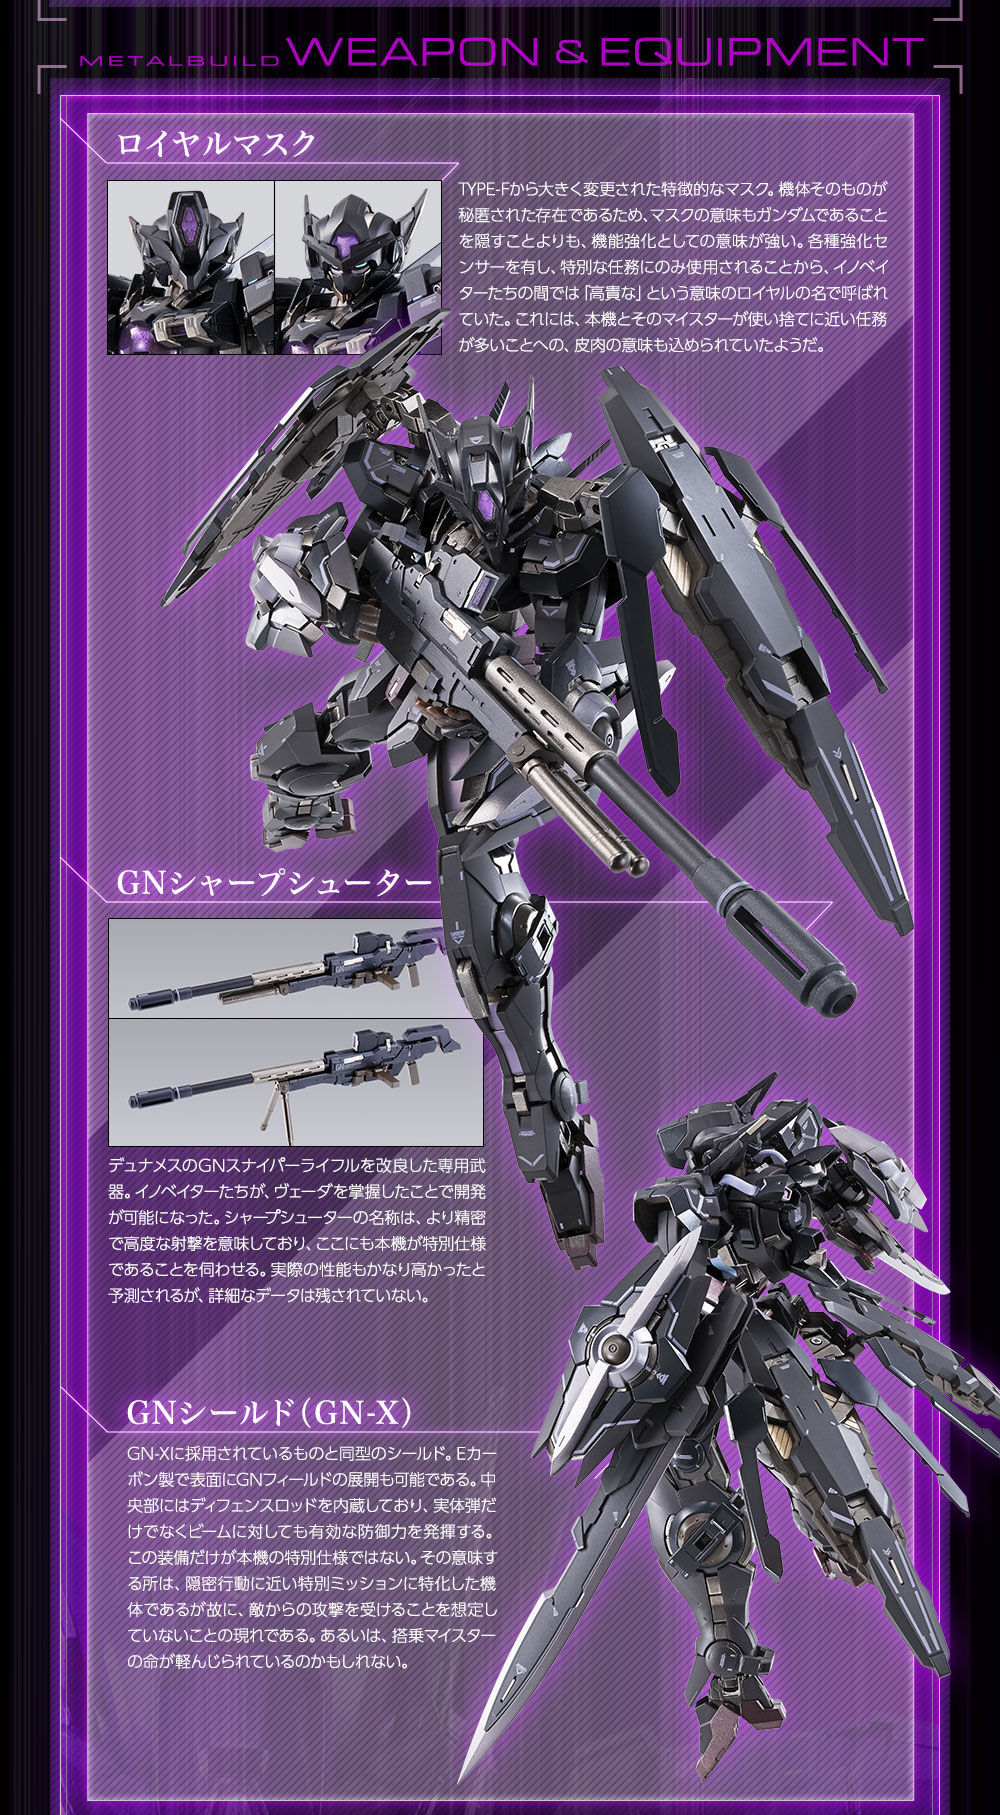 Metal Build GNY-001XB Gundam Astraea Type-X Finsternis